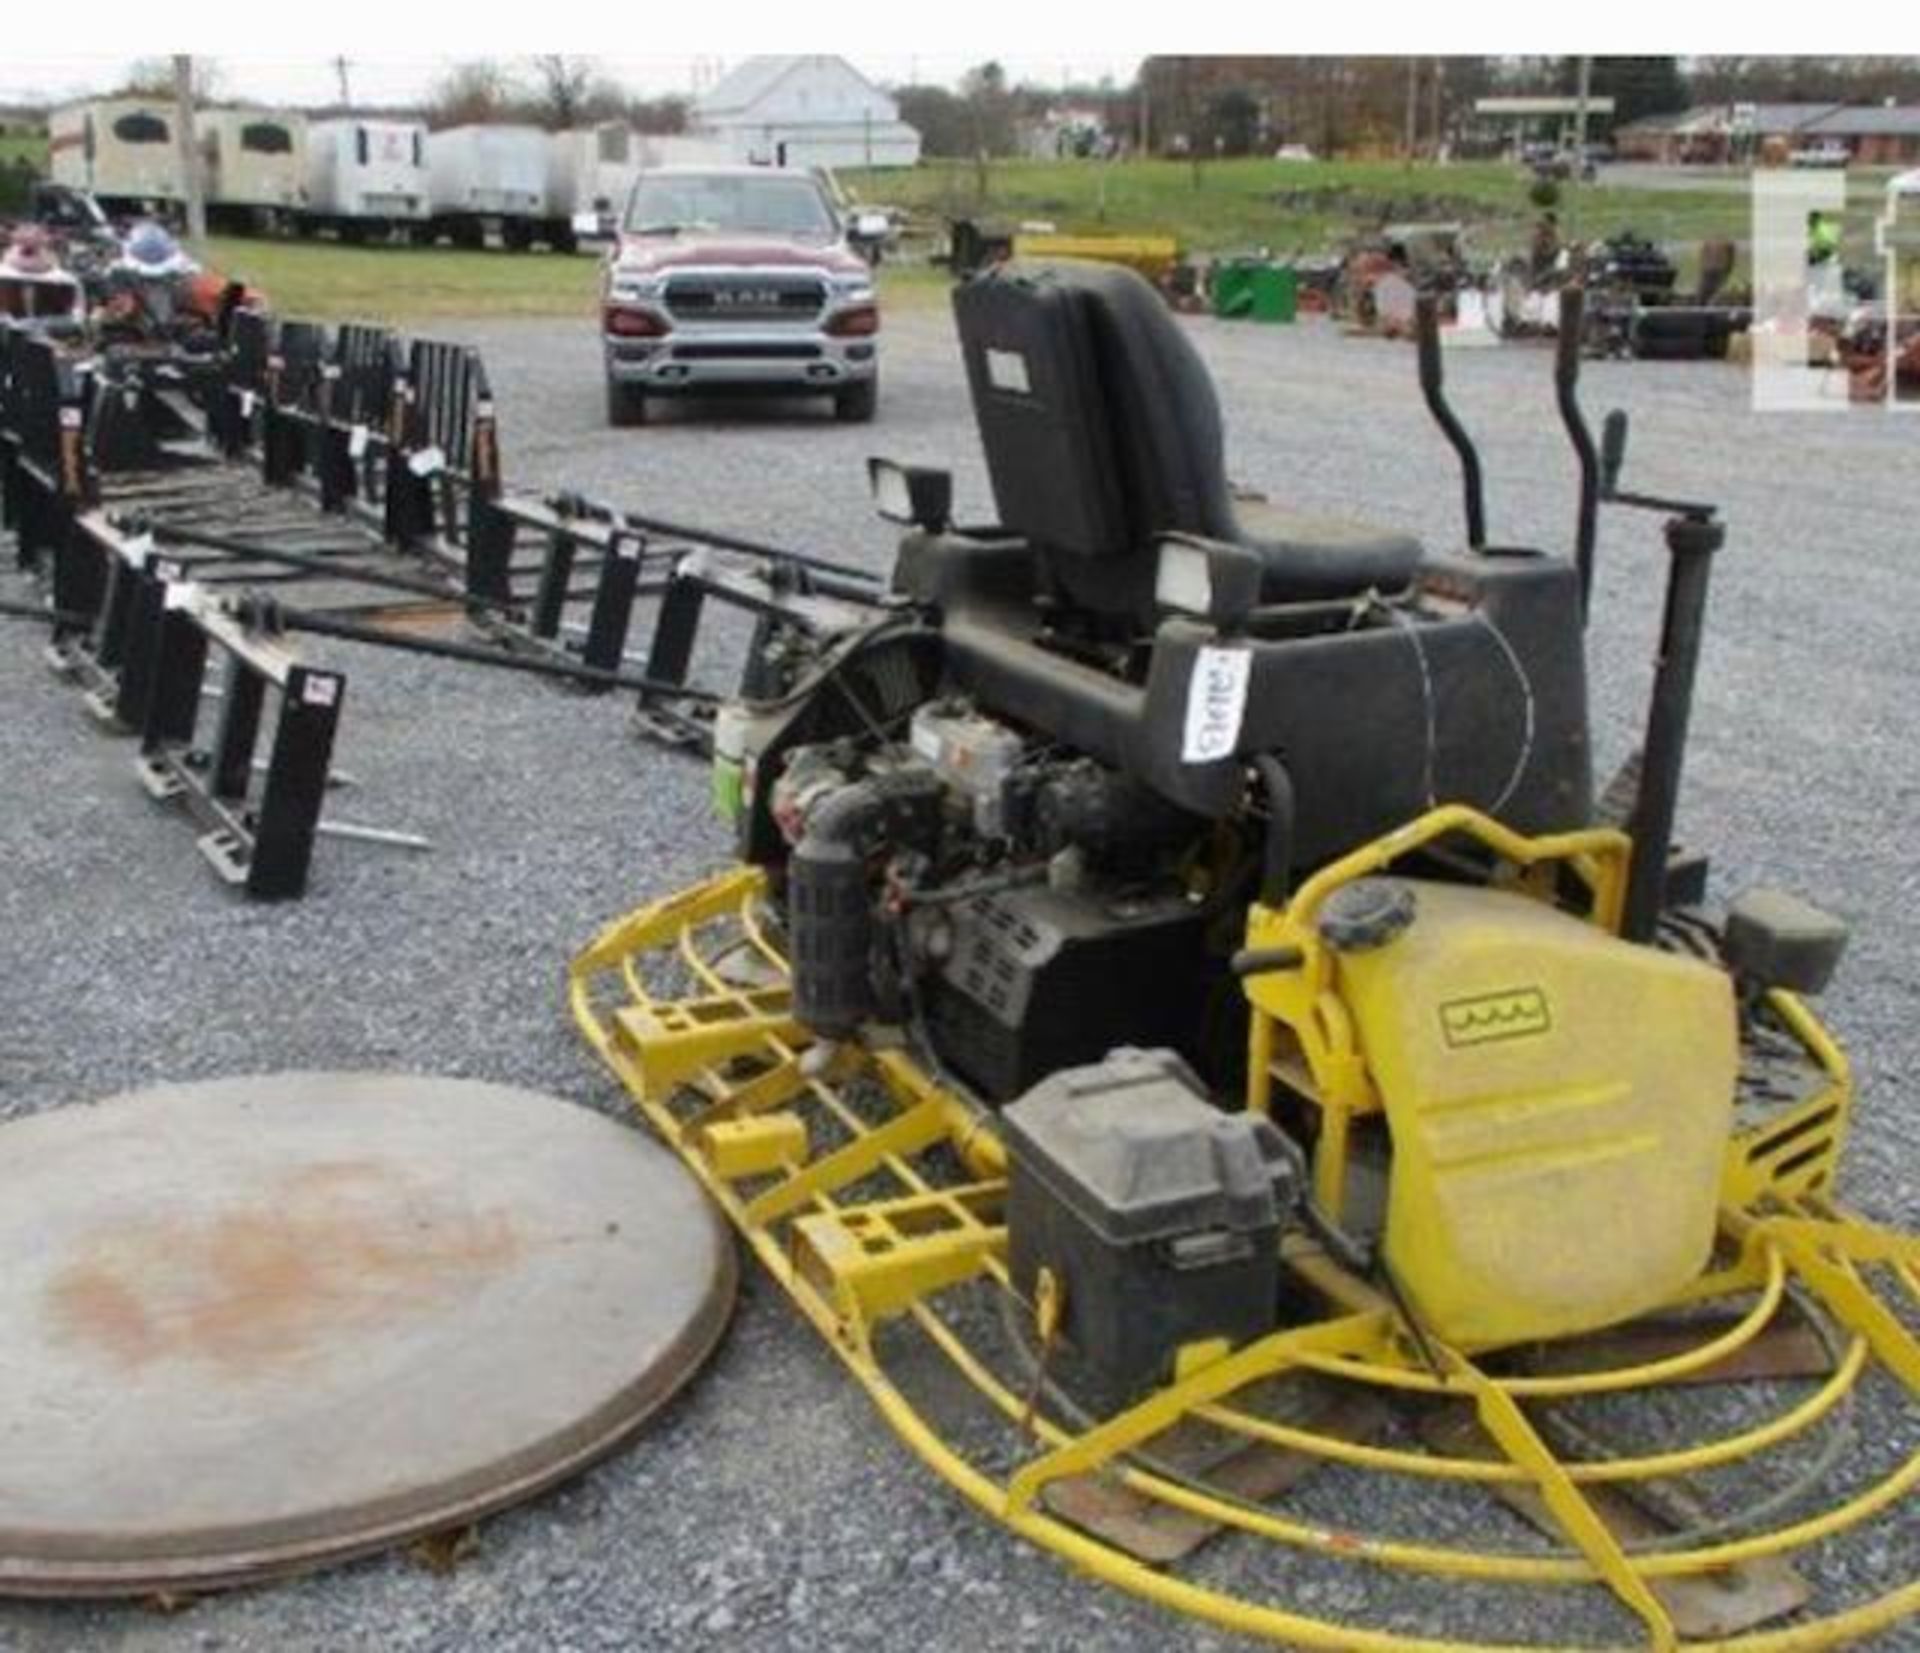 WACKER MO. CRT 48-3 RIDING TROWEL MACHINE W/ FLOAT PANS, S/N 5589313 - Image 4 of 7